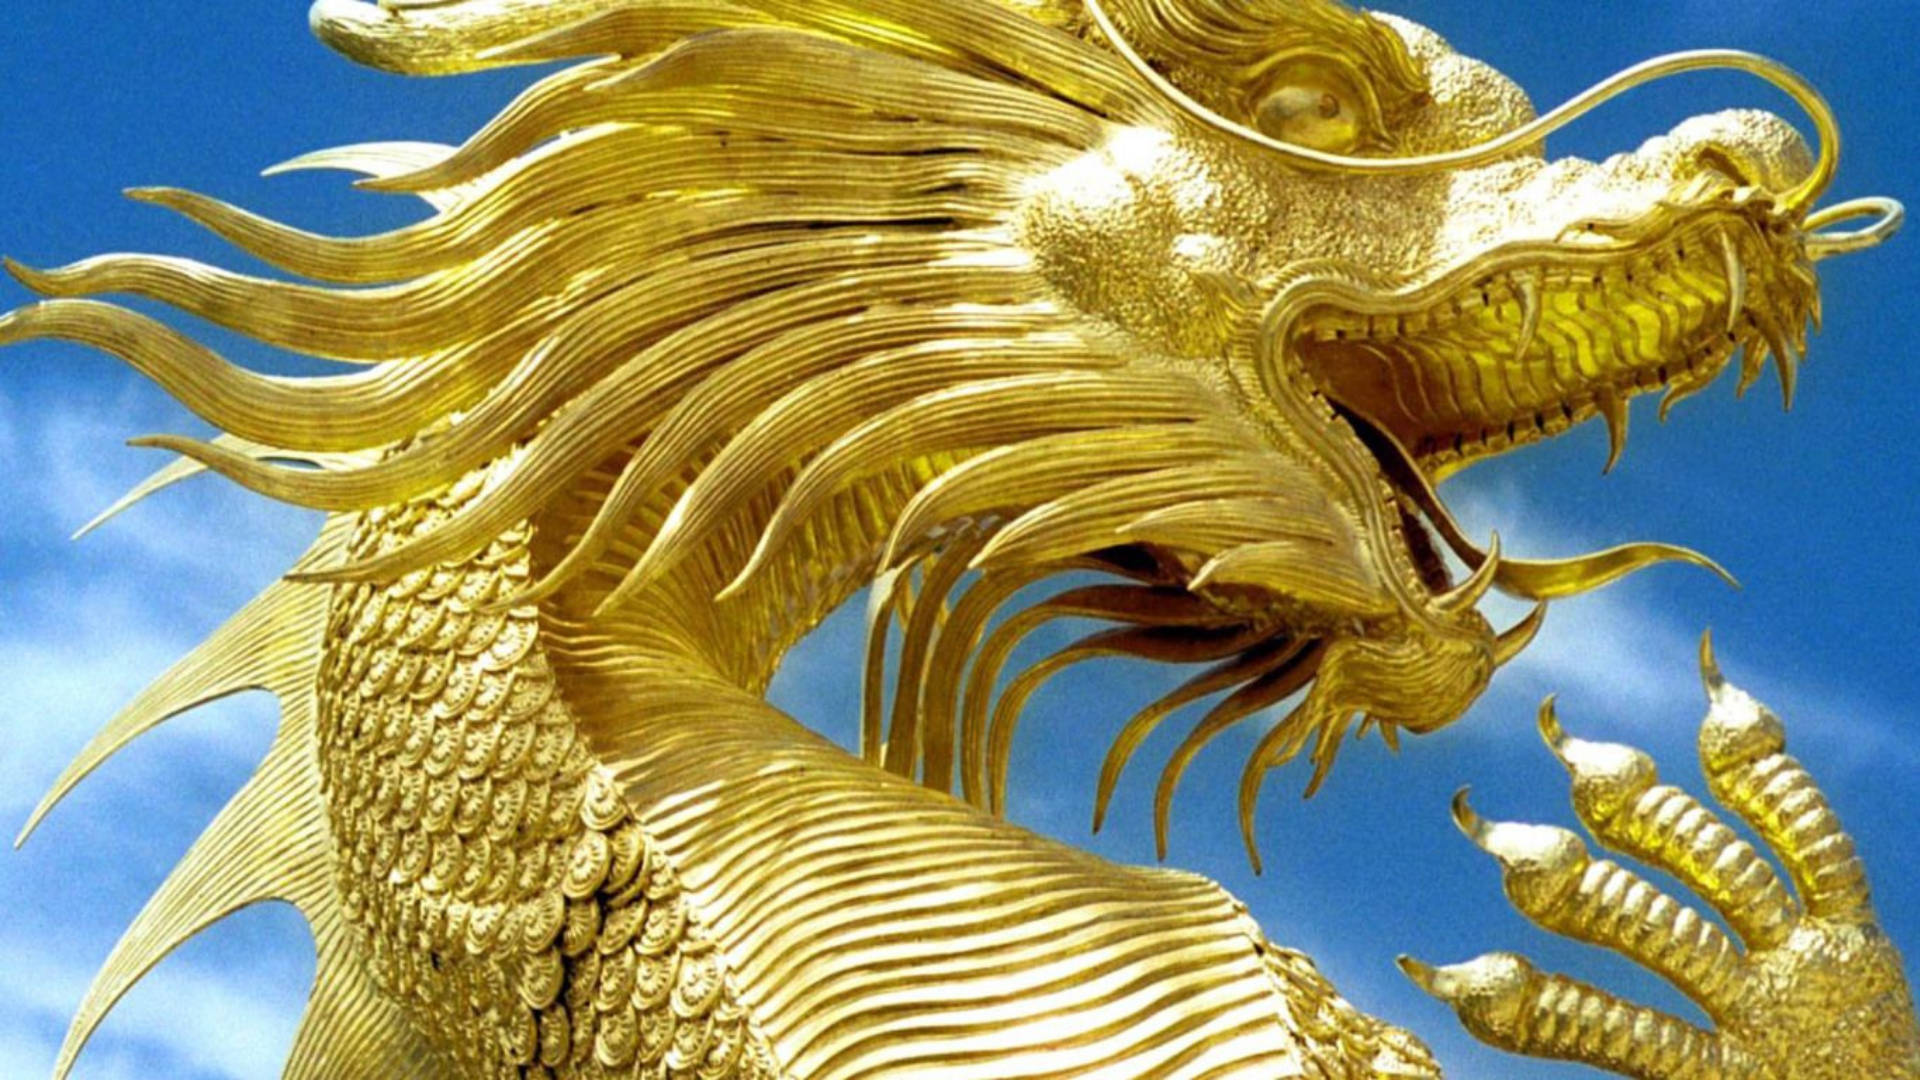 Golden Dragon Wallpaper Images